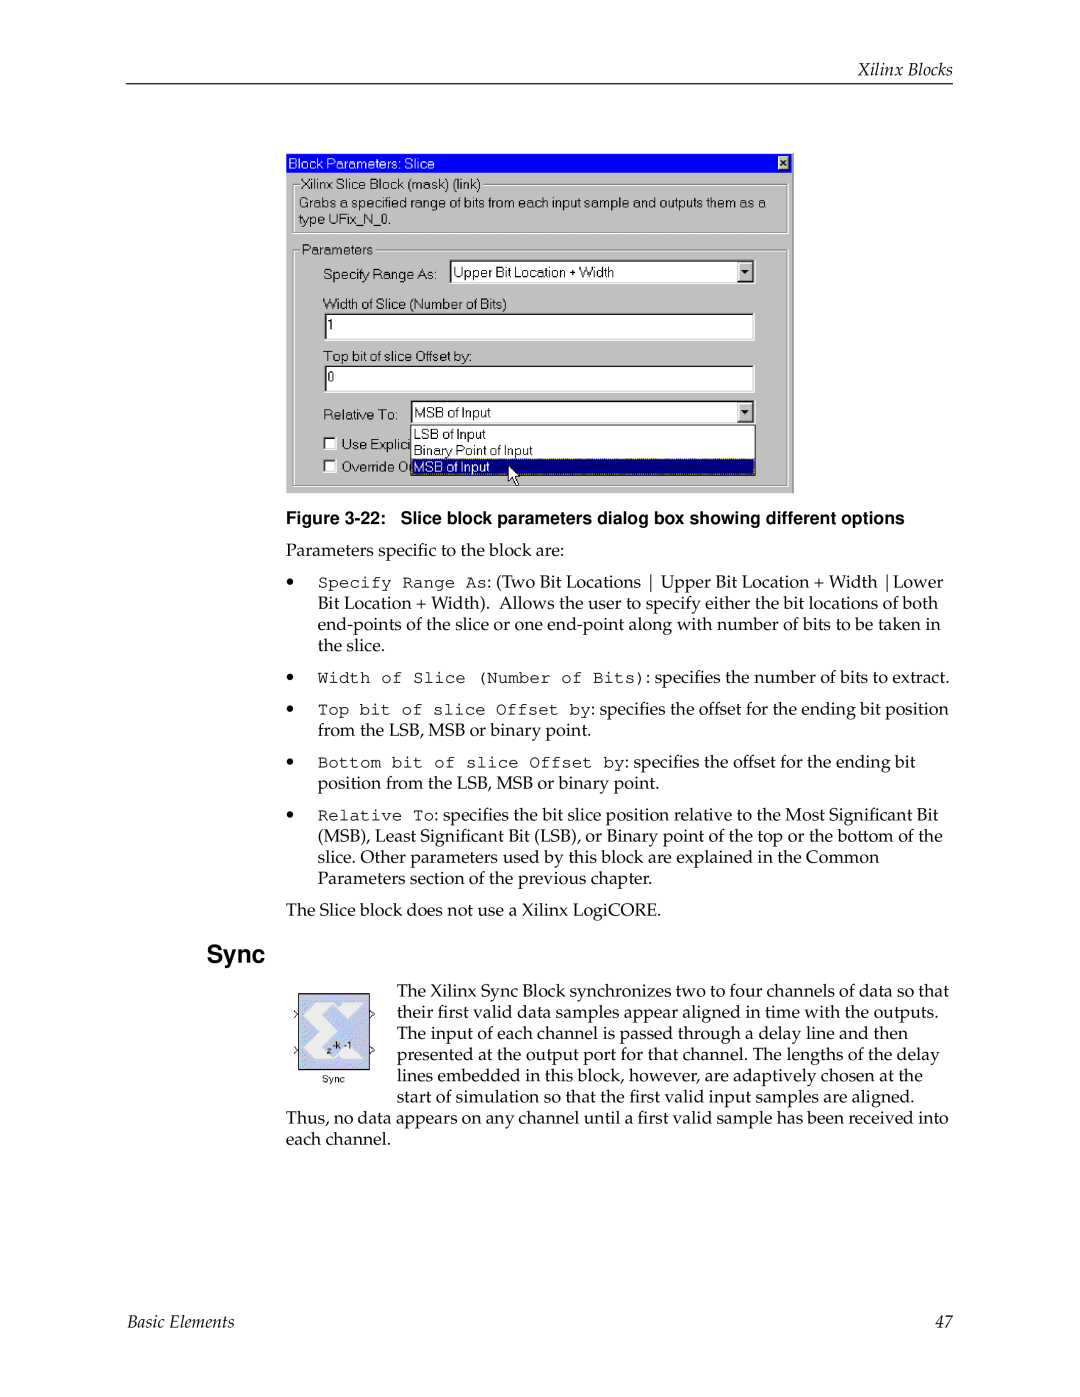 Xilinx V2.1 manual Sync, Xilinx Blocks, Basic Elements 